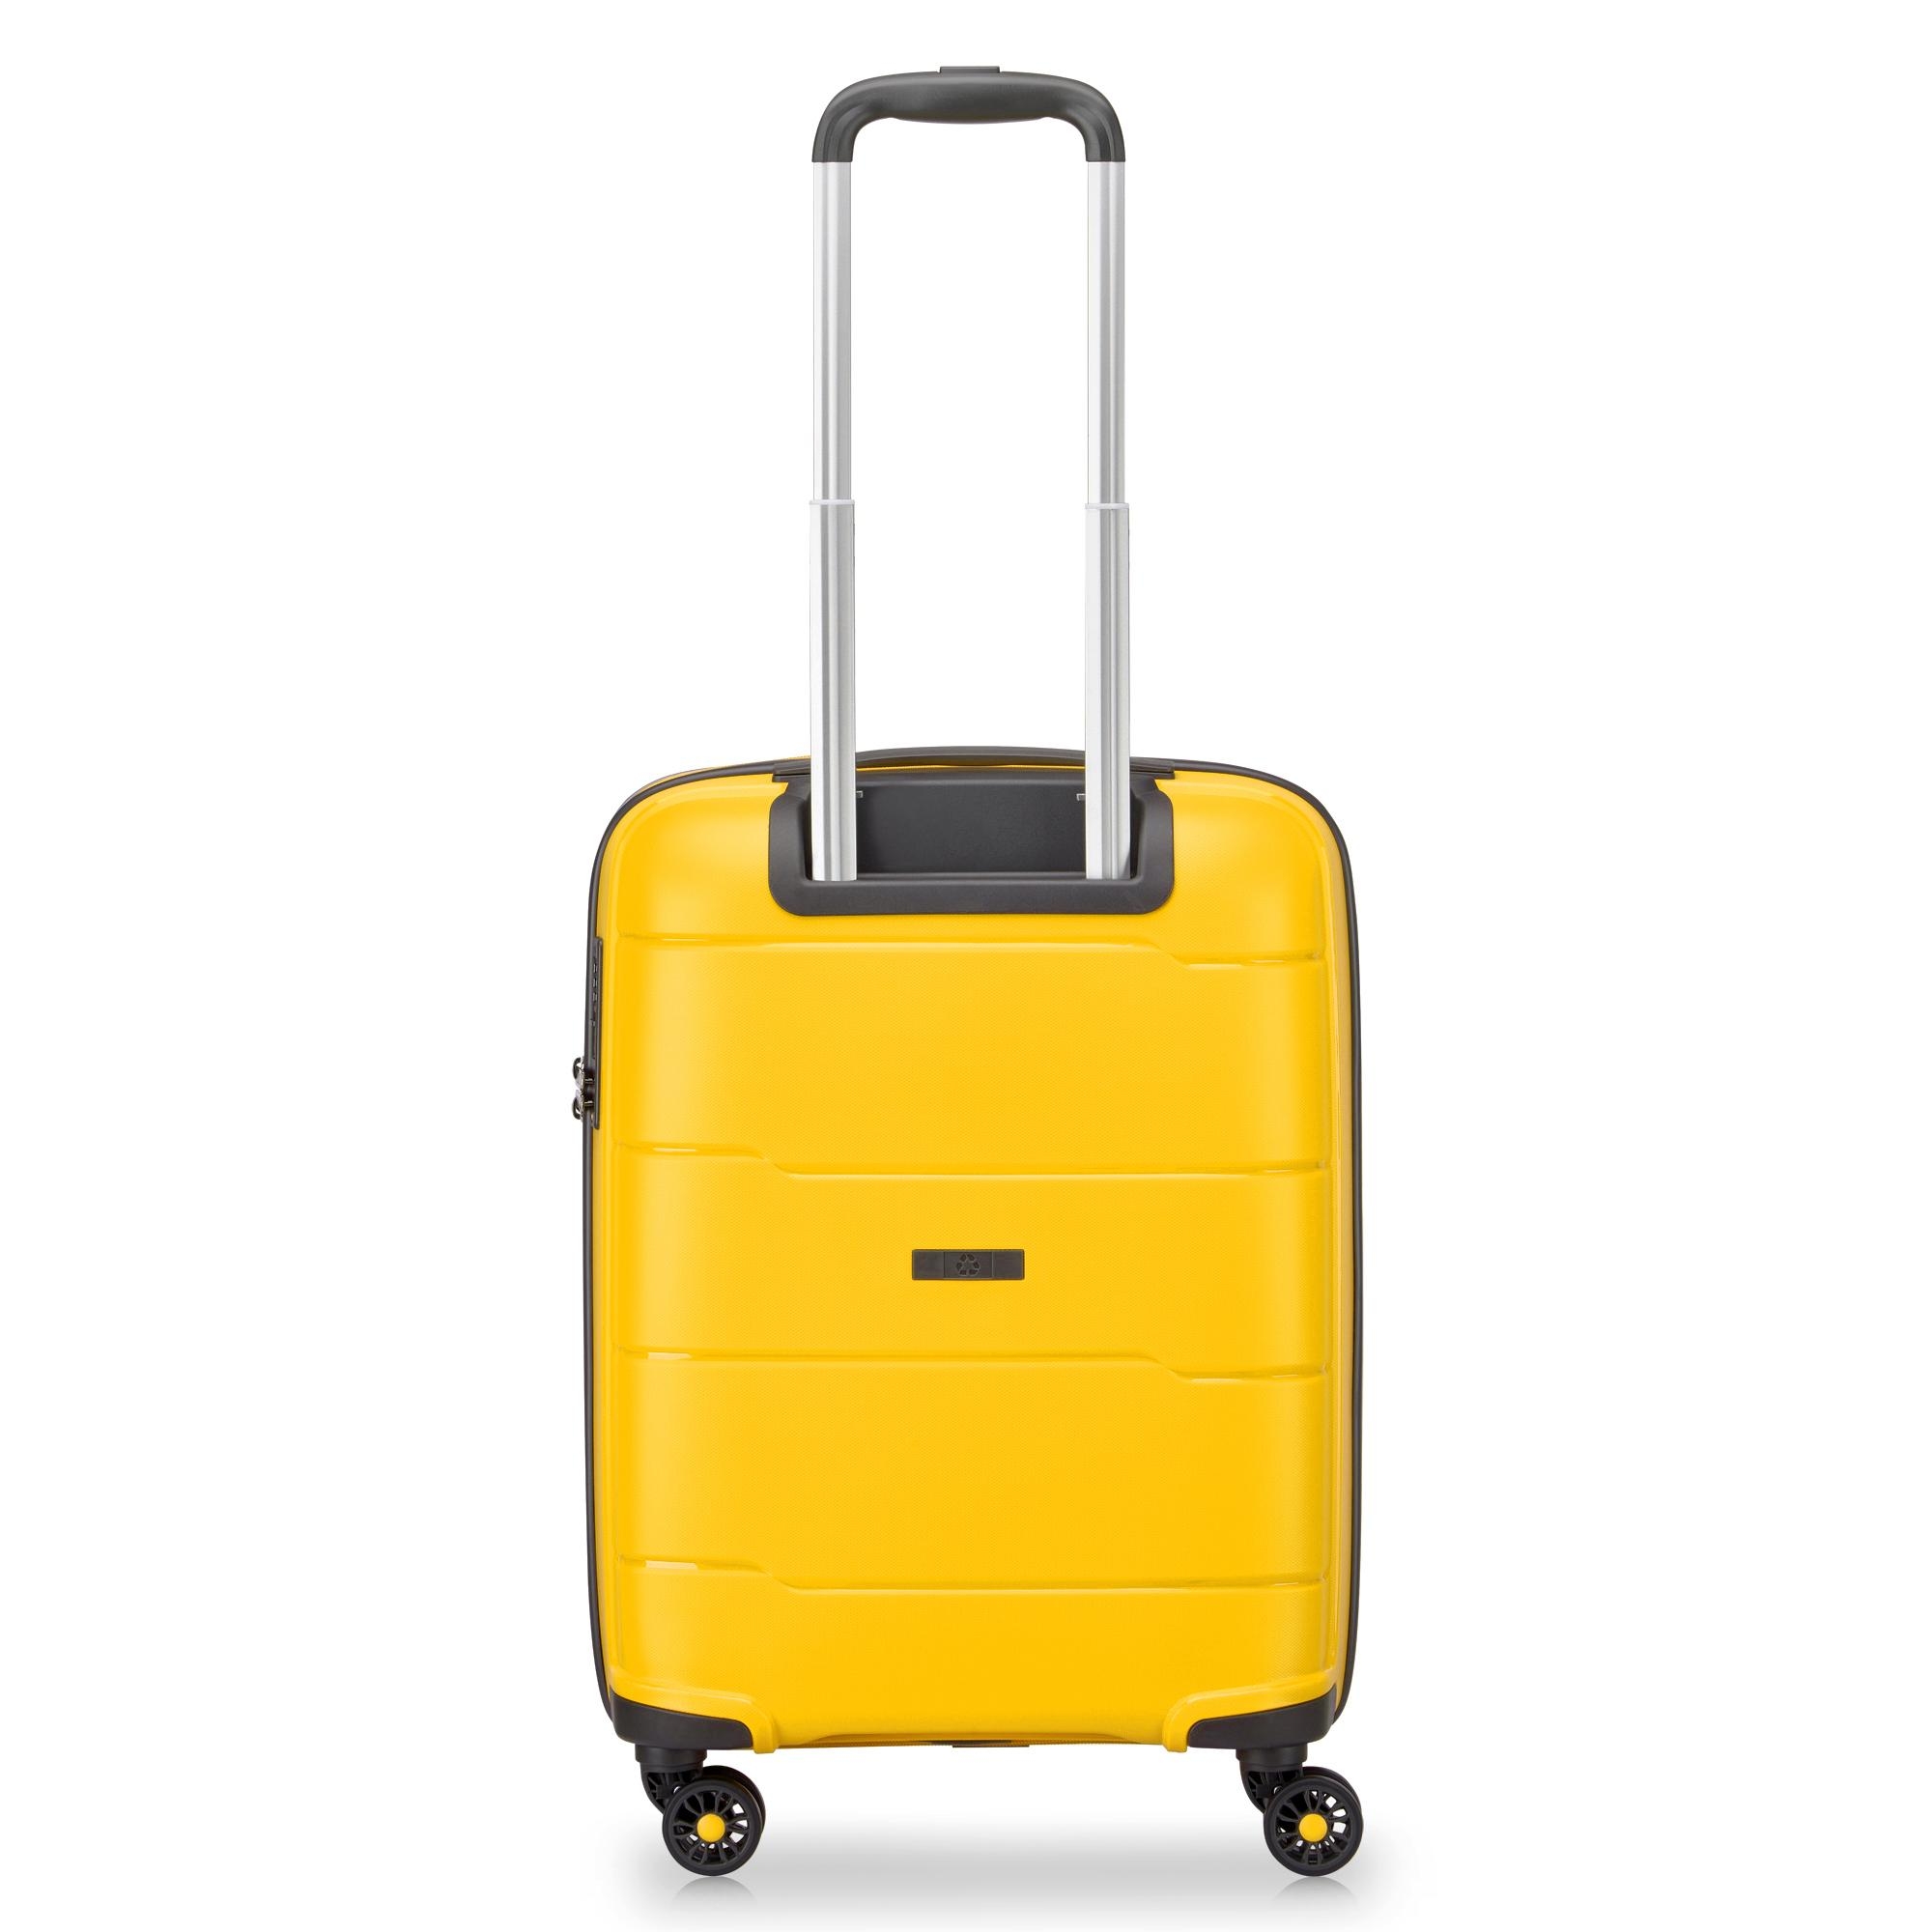 Vali Modo by Roncato Galaxy size S (20 inch) - Yellow thời trang